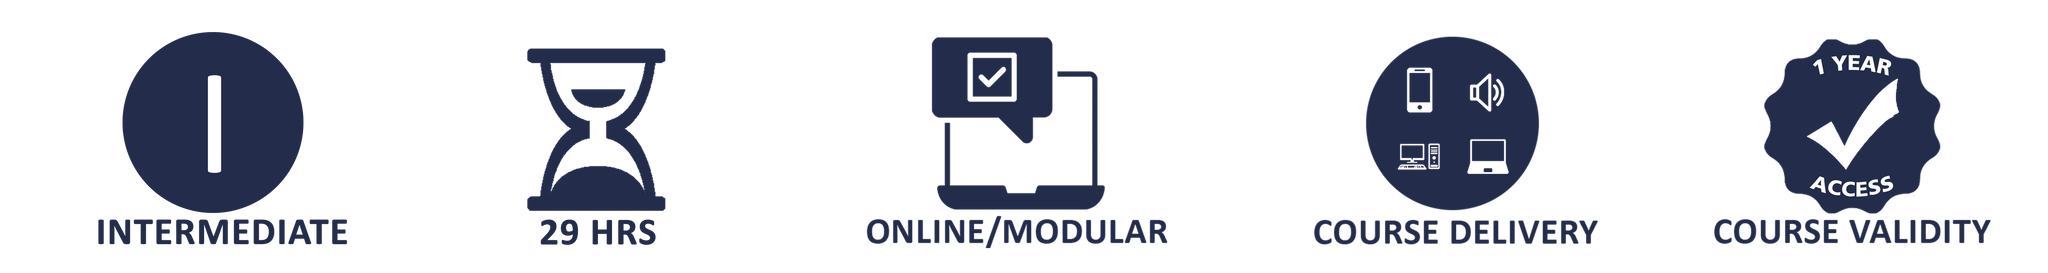 Mandatory Training for Residential Home Staff - Online Training Package - The Mandatory Training Group UK -